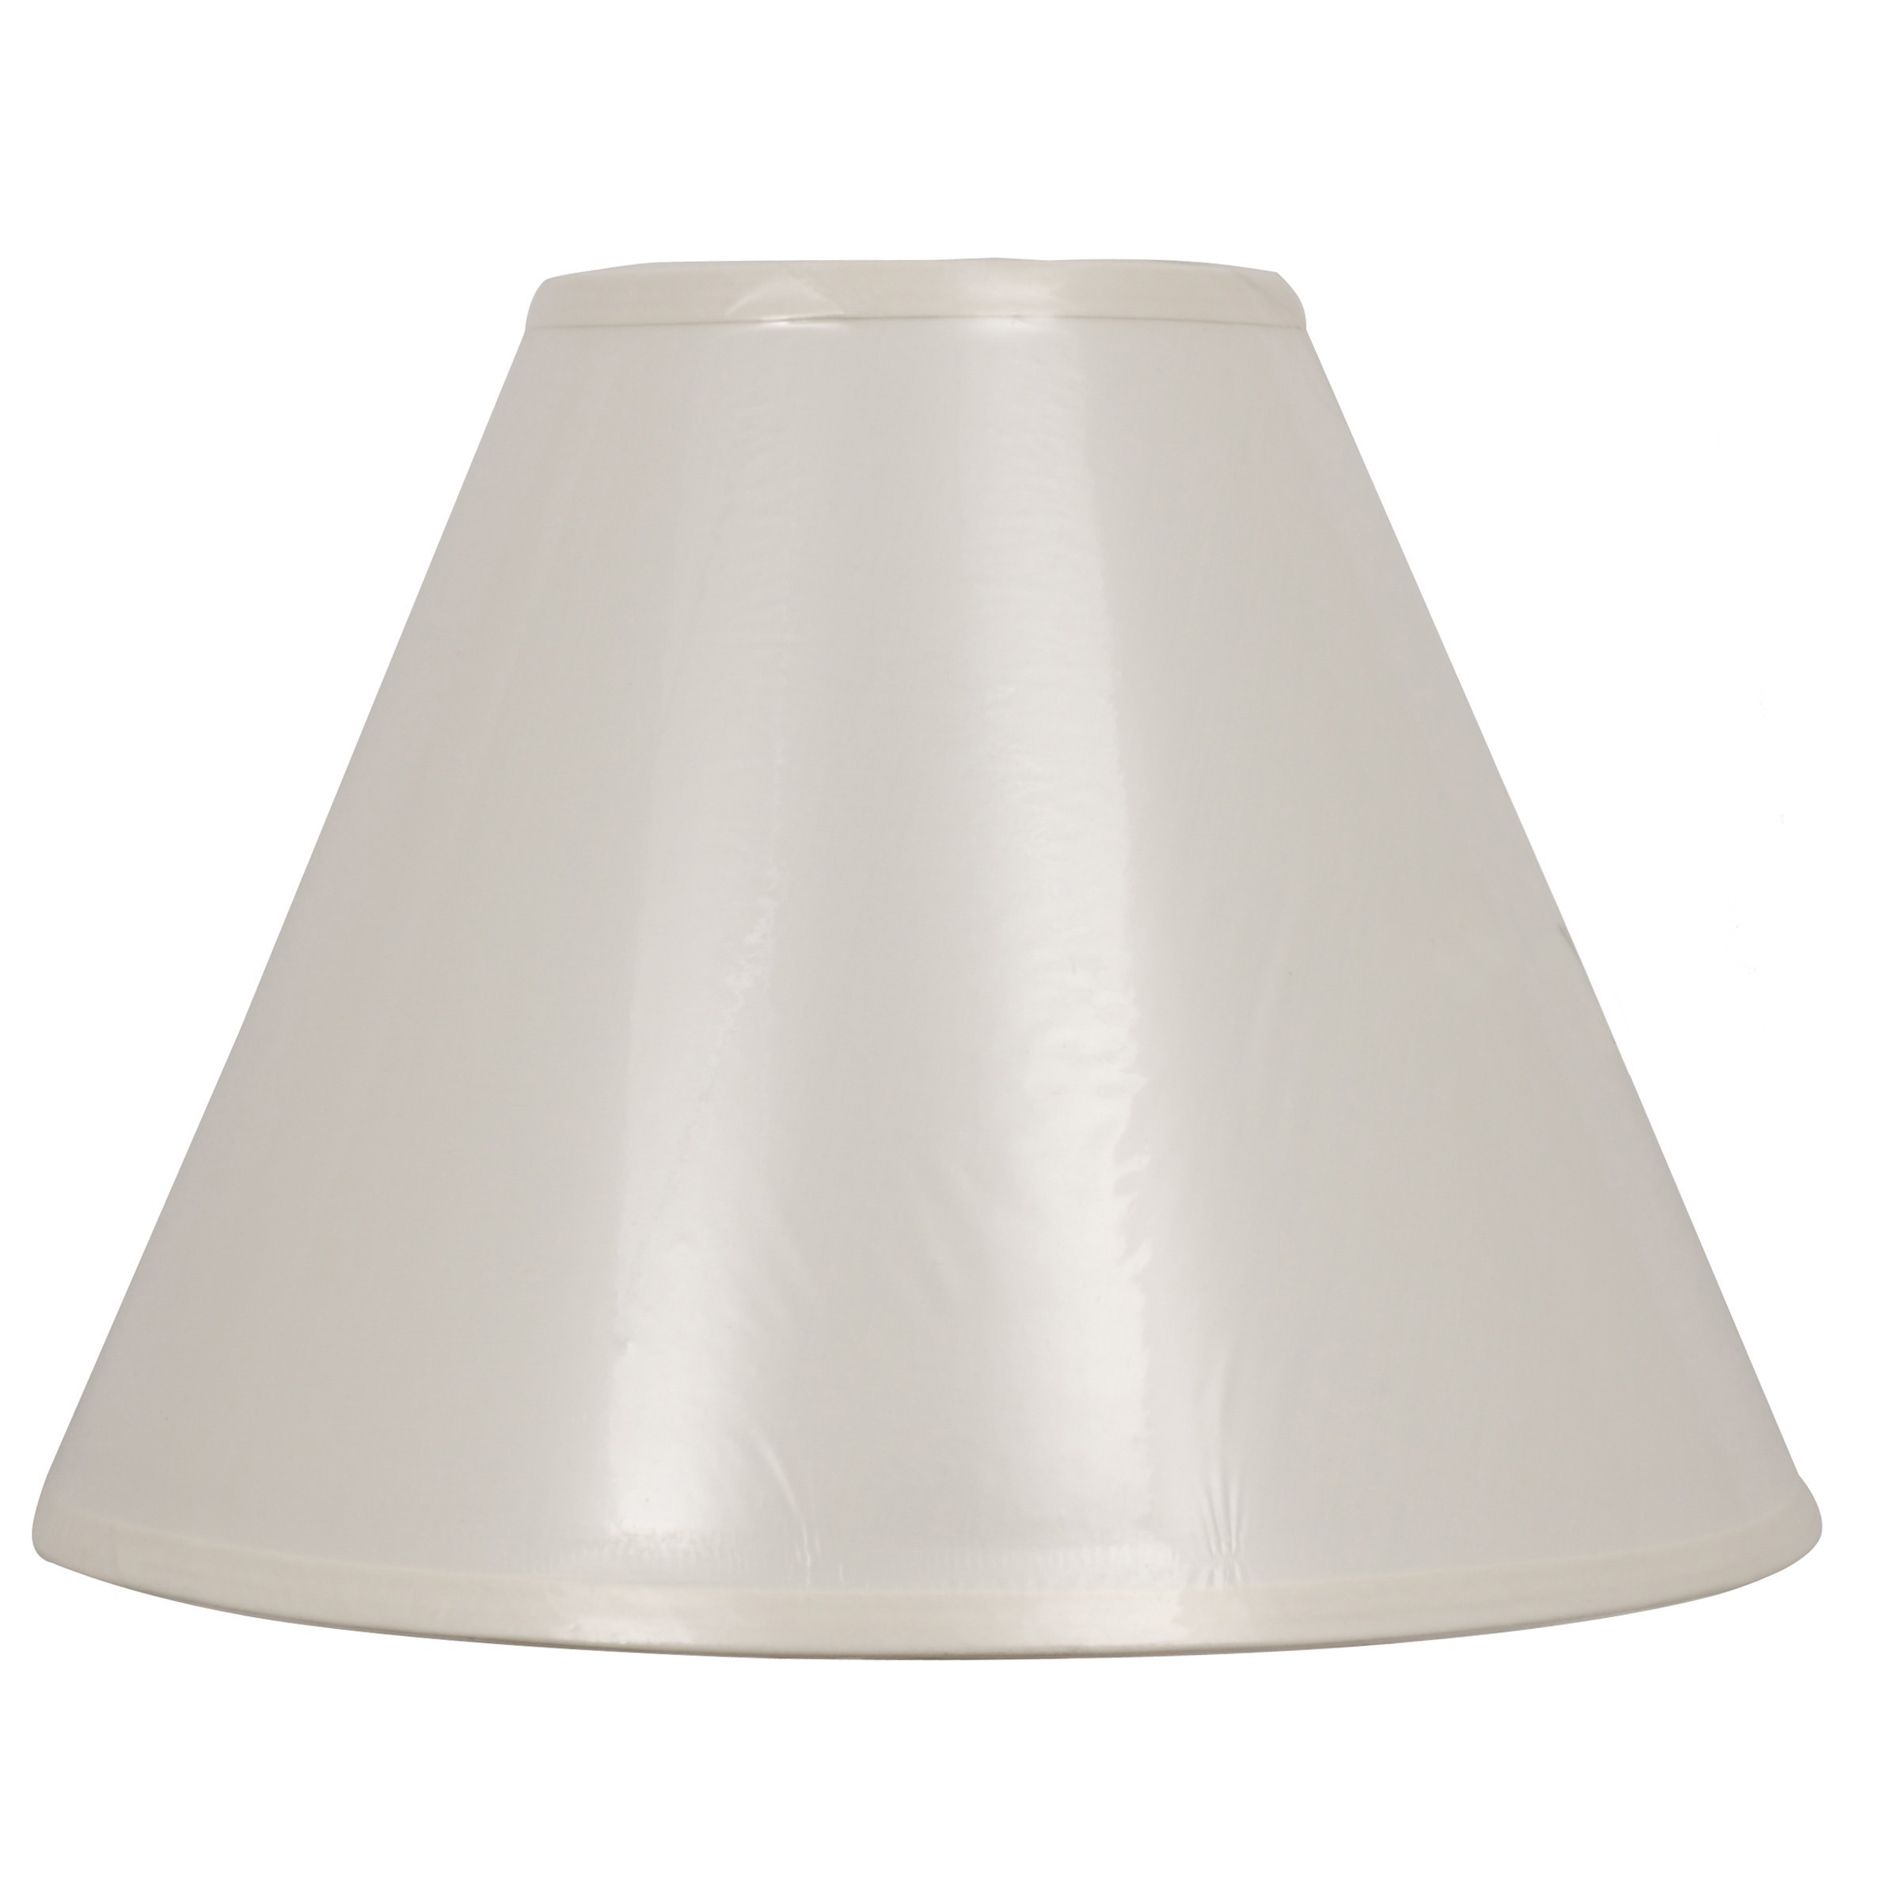 Essential Home Lamp Shade White Hardback Cone